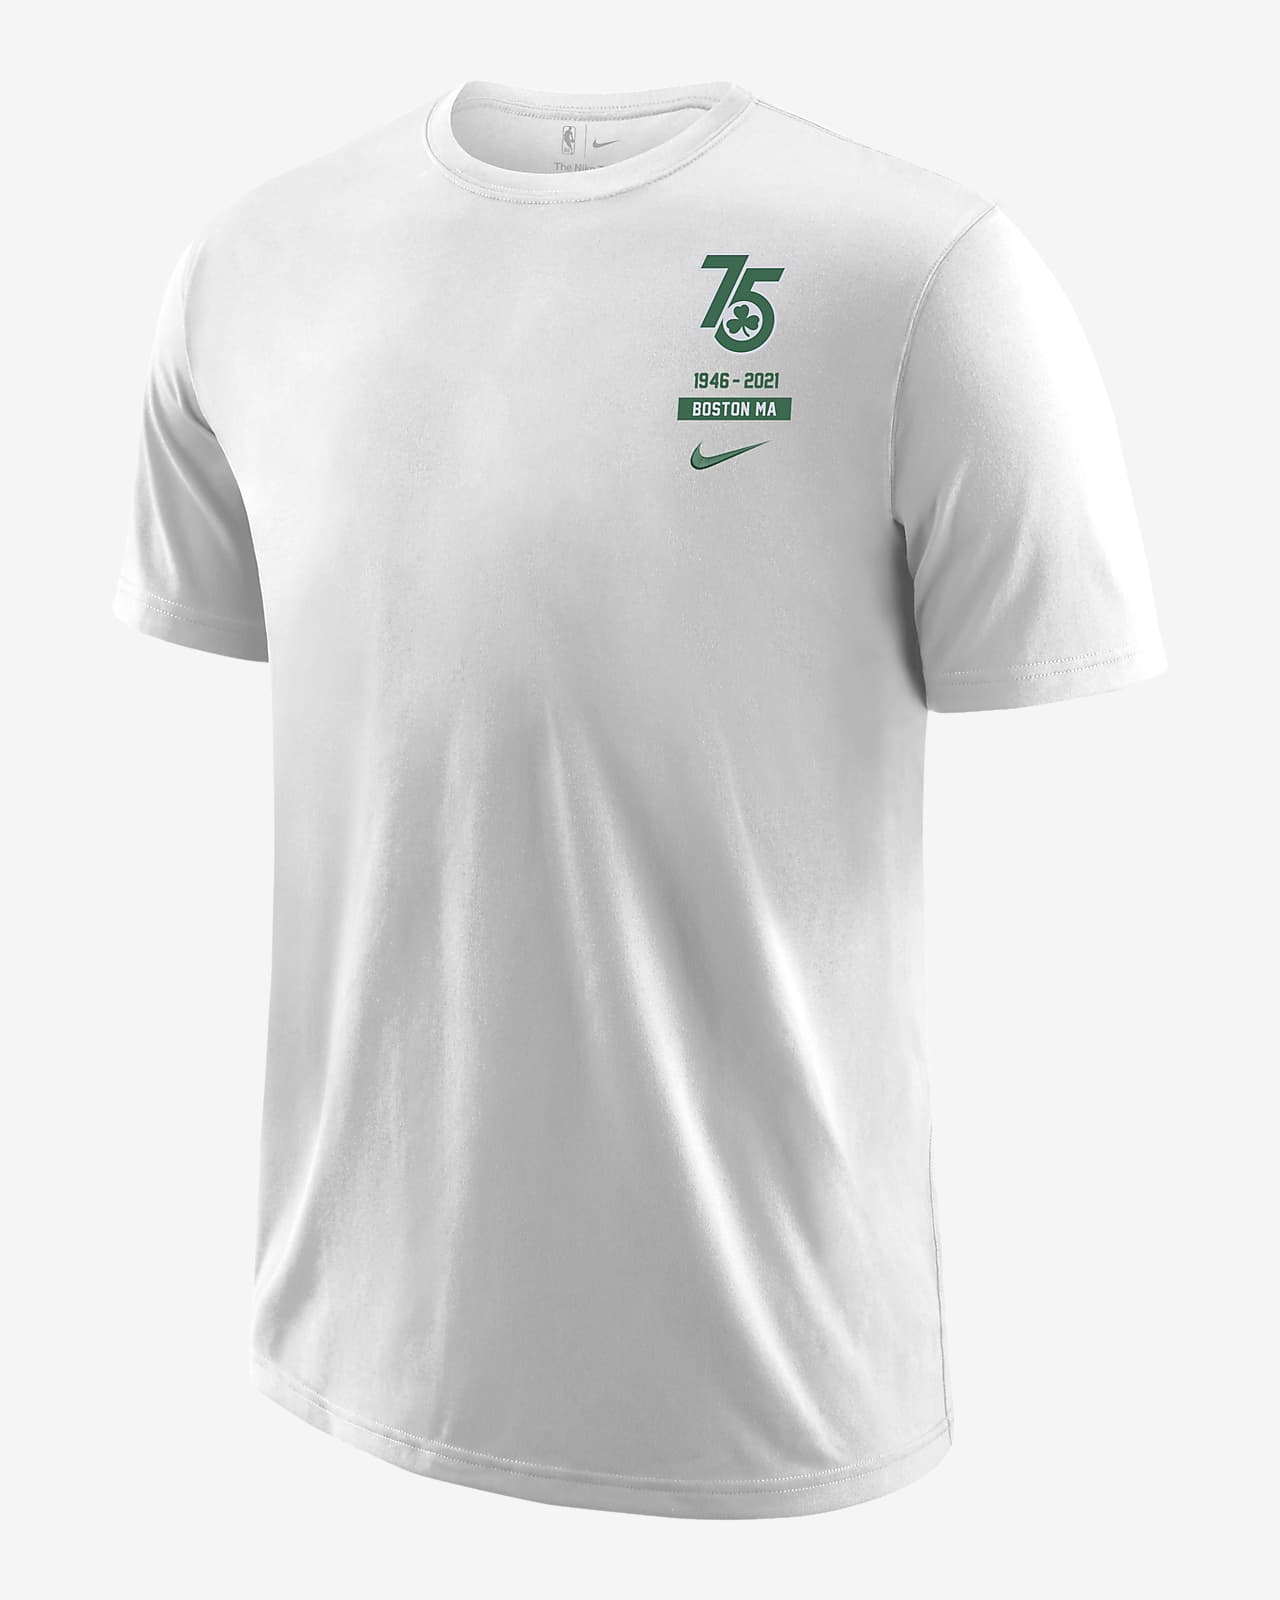 Boston Celtics Courtside City Edition Men's Nike NBA T-Shirt